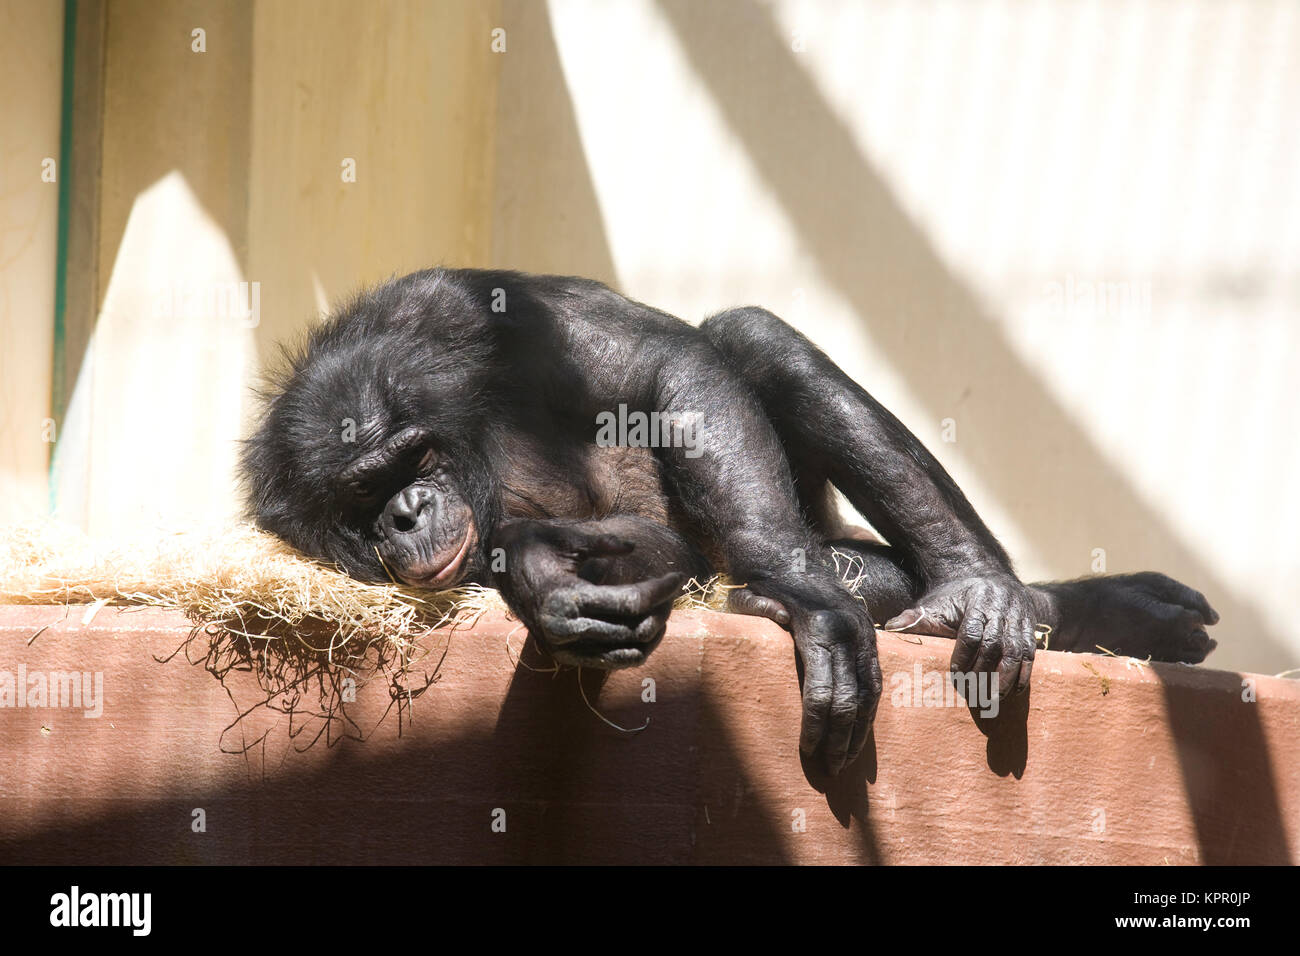 Europe, Germany, Wuppertal, the Zoo, Bonobo monkey (Pan paniscus).  Europa, Deutschland, Wuppertal, Zoo Wuppertal, Bonobo Affe (Pan paniscus). Stock Photo